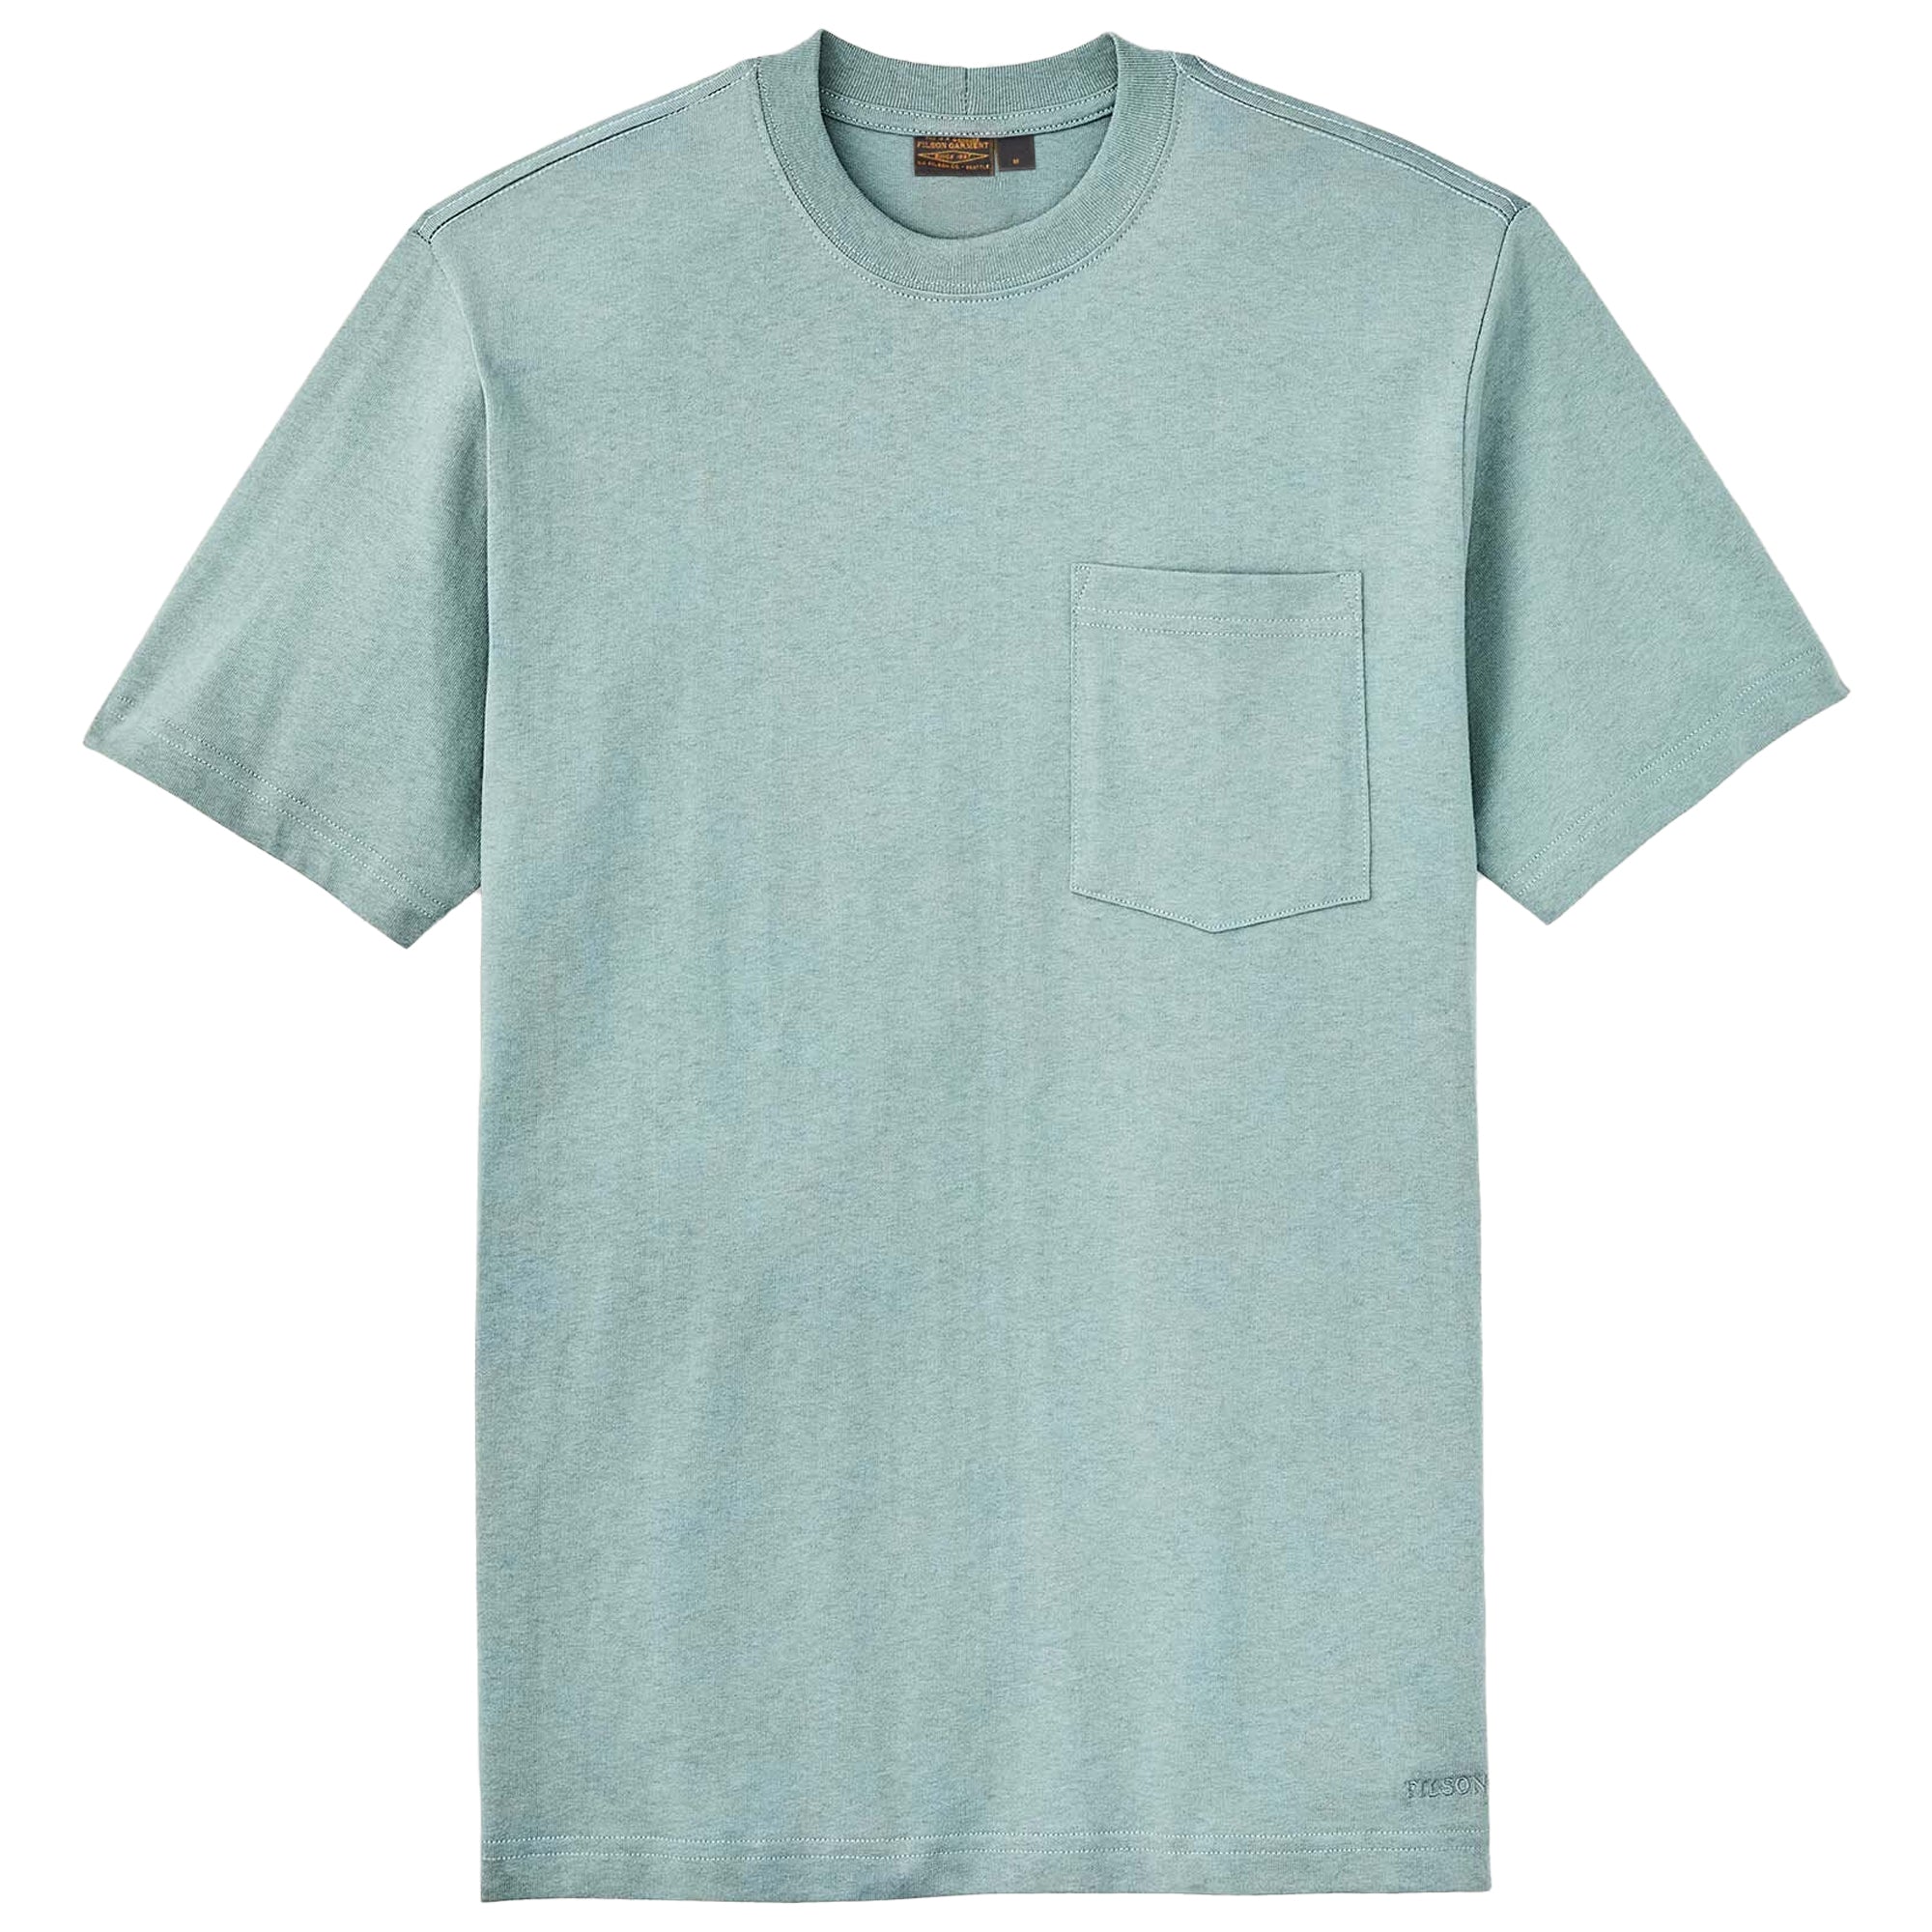 Filson Pioneer Solid One Pocket T-Shirt - Lead